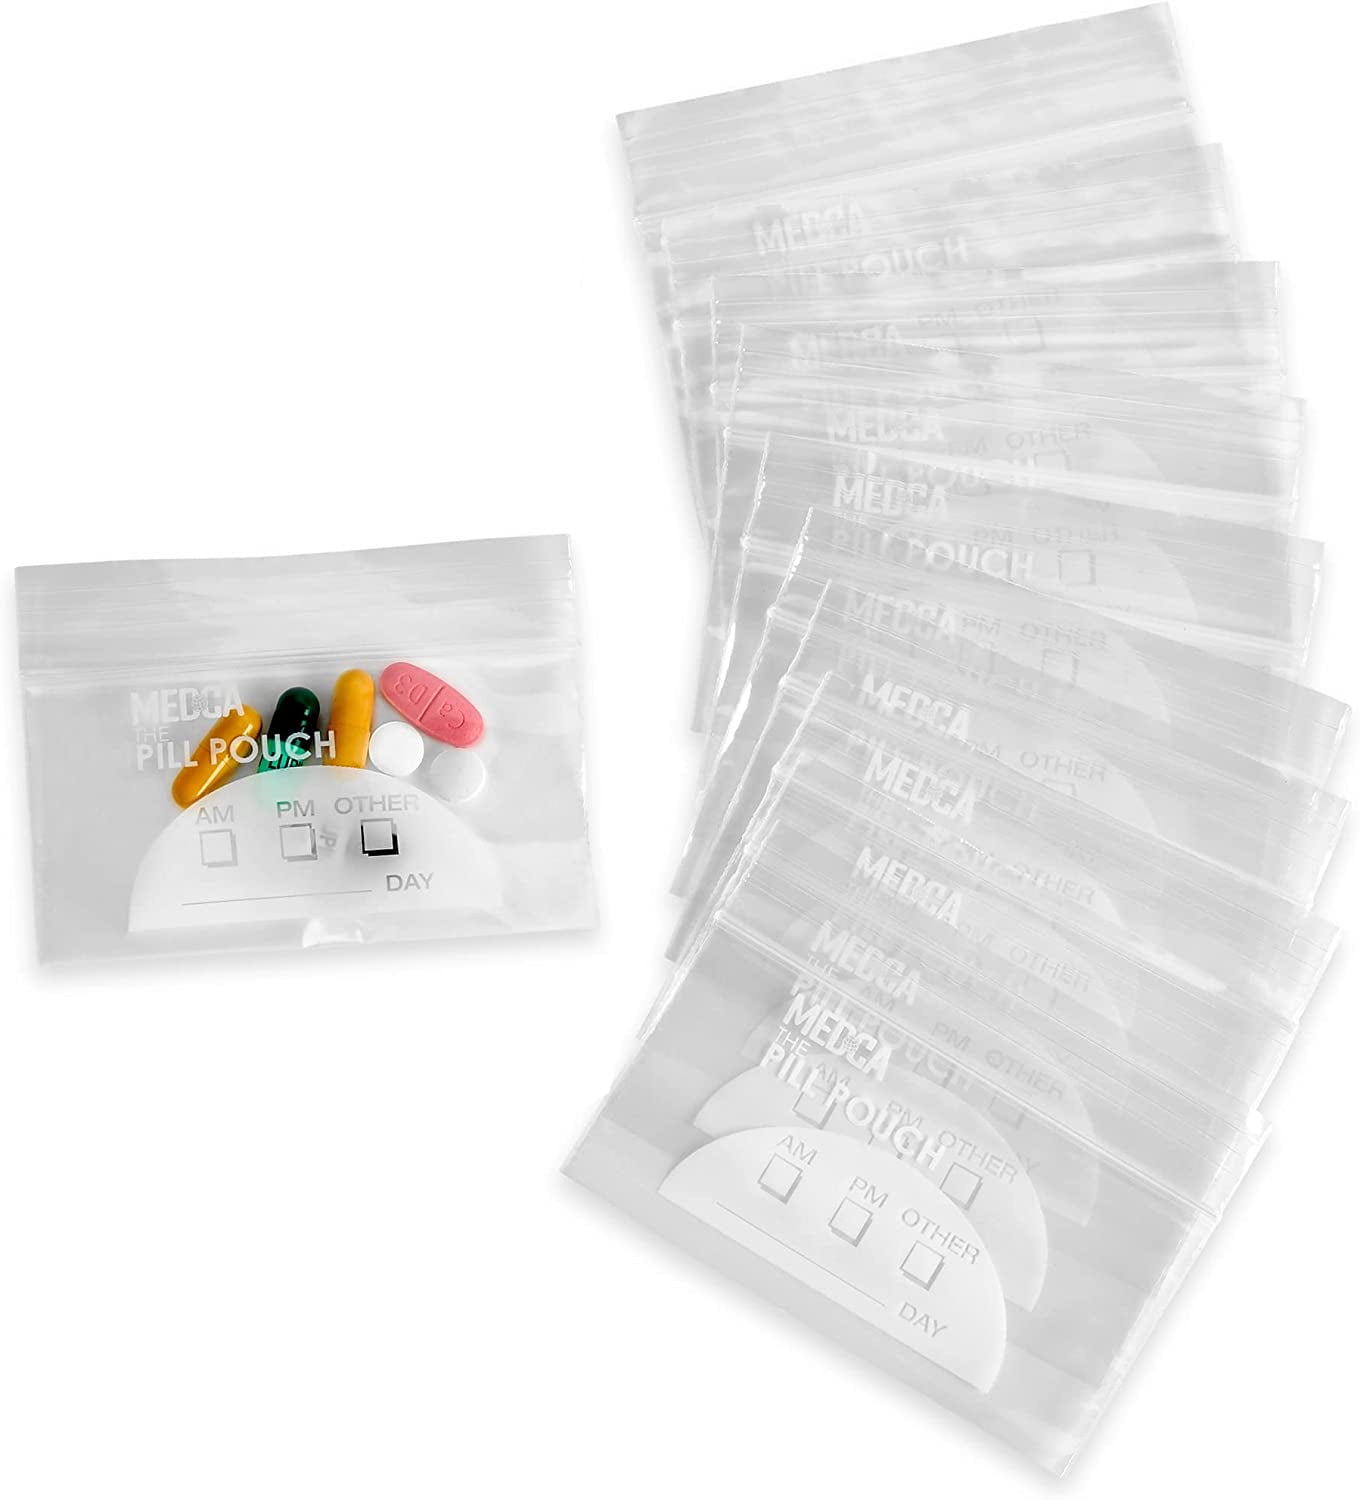 14 Pcs AM PM Pill Pouches Bags Set Zippered Pill Bags Travel